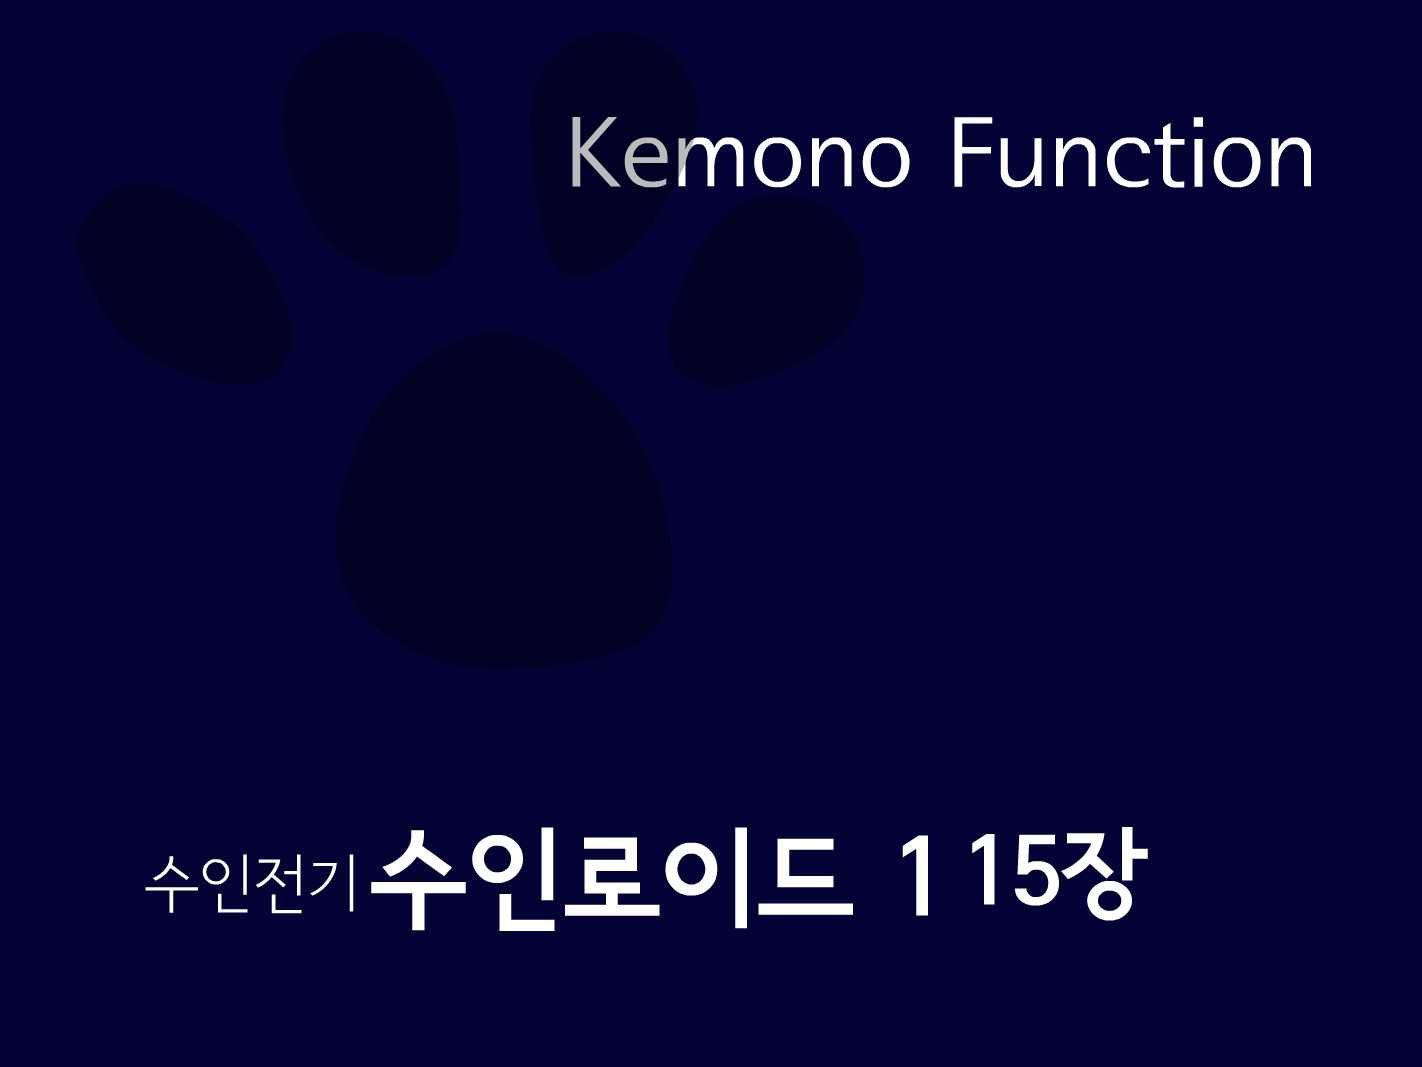 Kemono Function